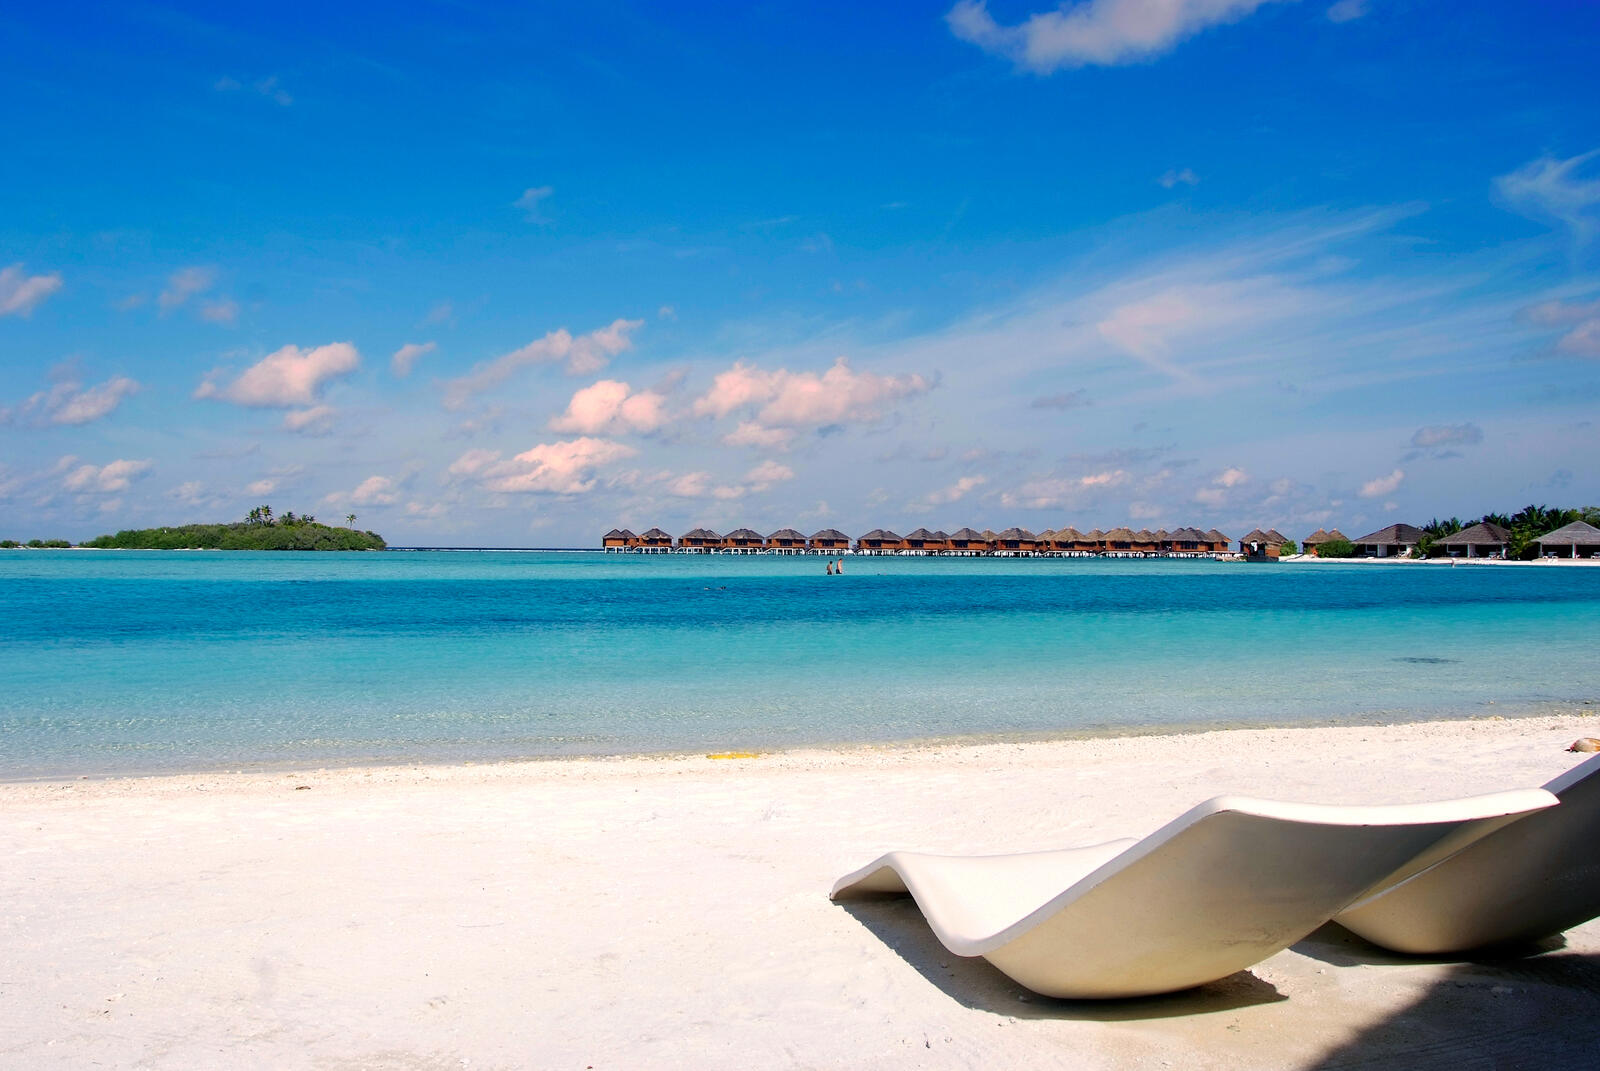 Wallpapers landscapes maldives beach on the desktop